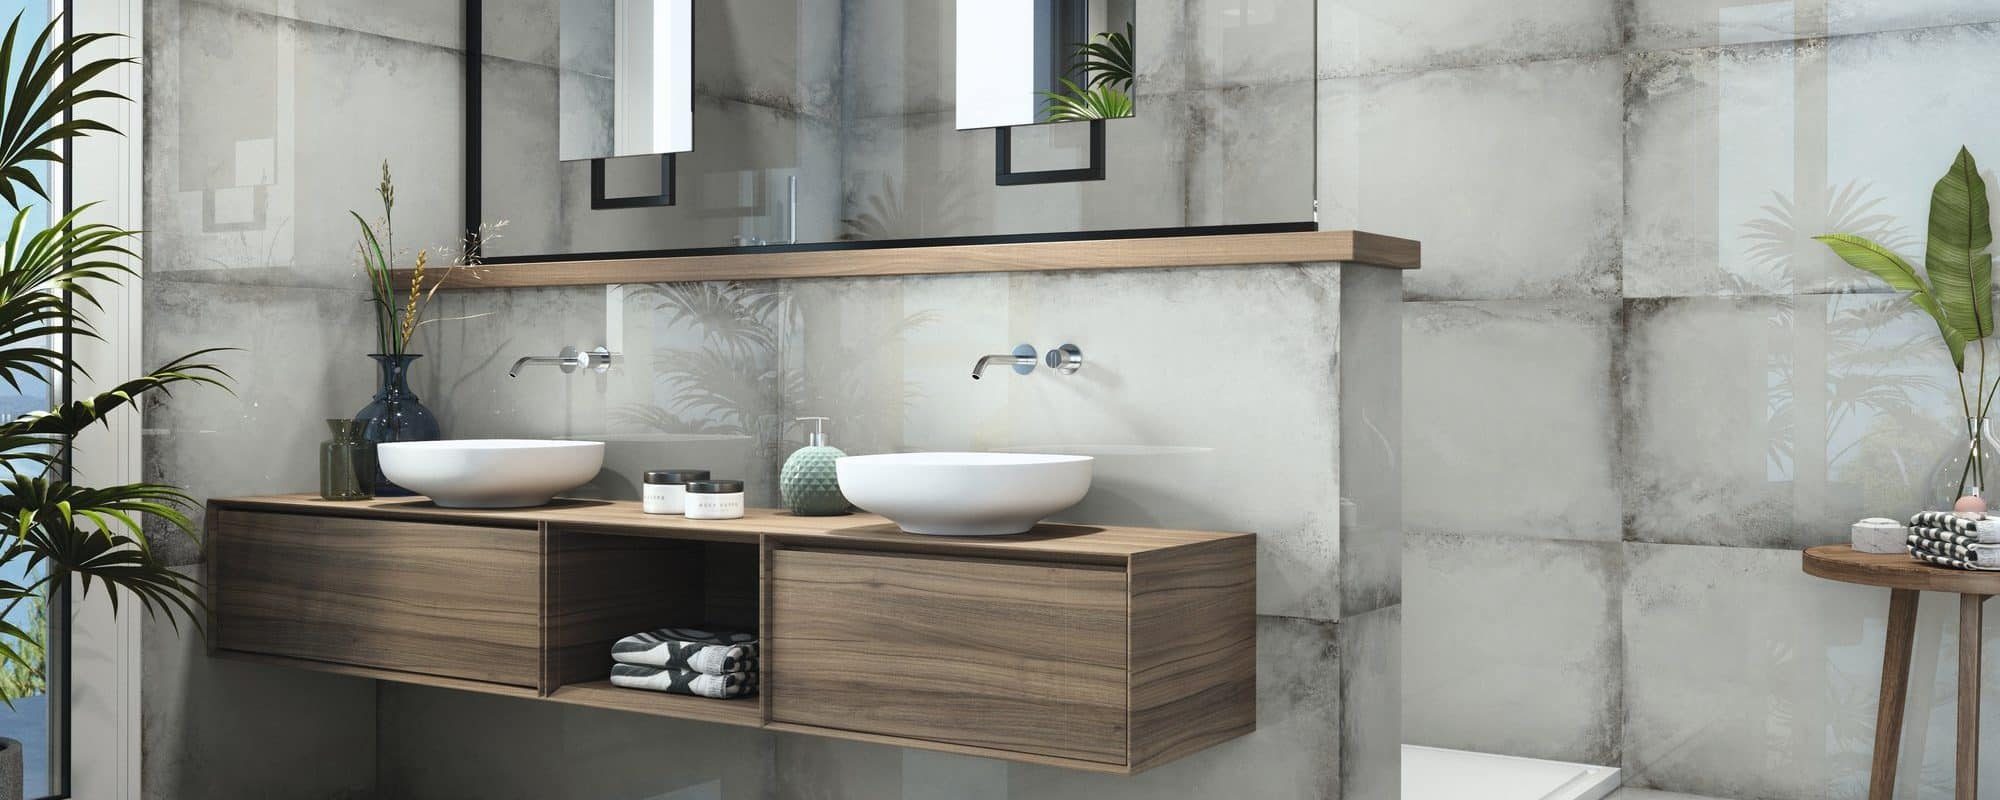 NAXOS cement effect porcelain bathroom tiles uk slider 2